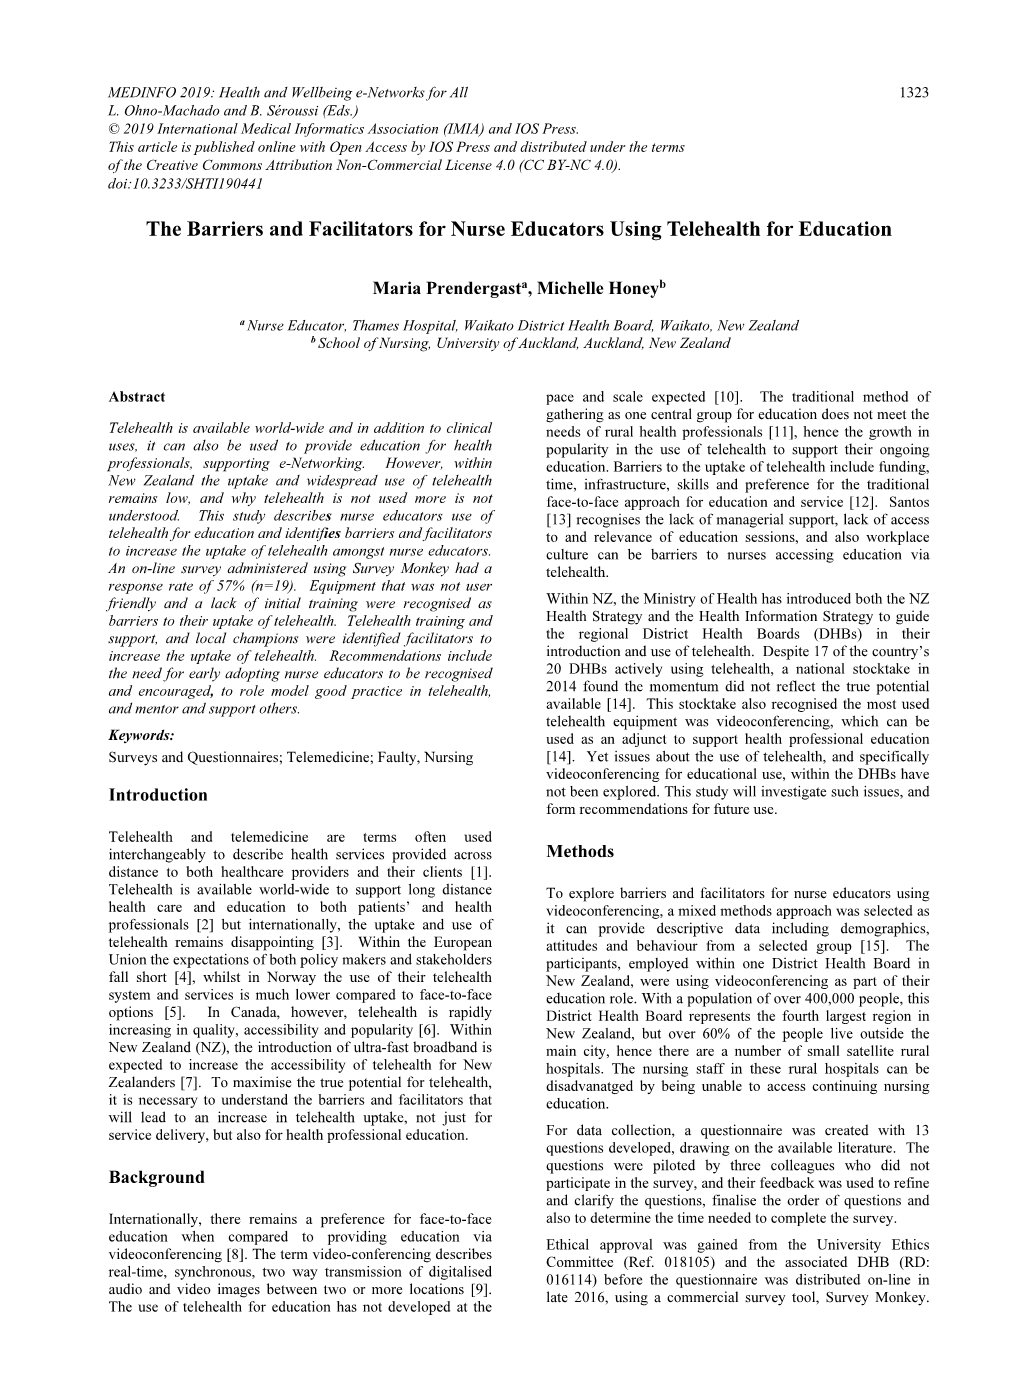 The Barriers and Facilitators for Nurse Educators Using Telehealth for Education